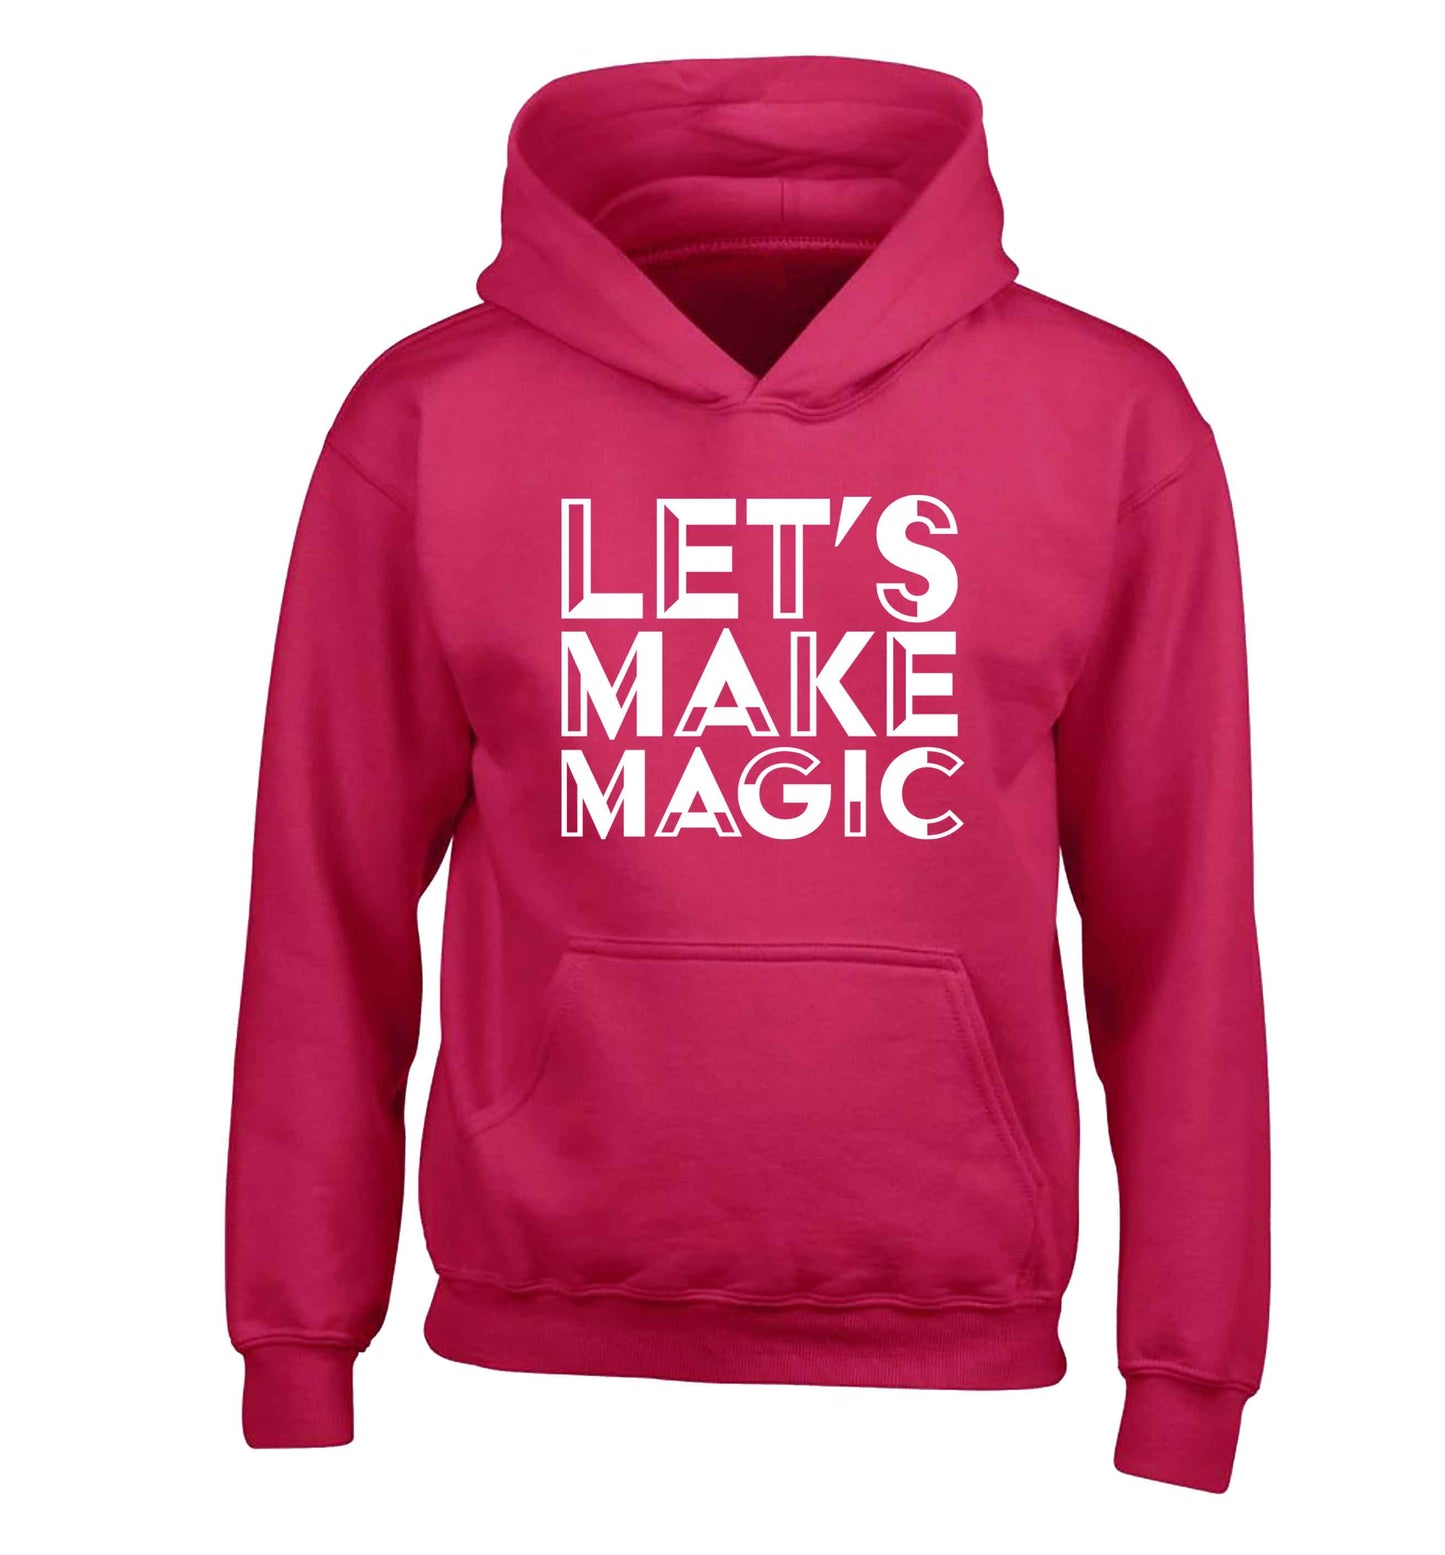 Let's make magic children's pink hoodie 12-13 Years